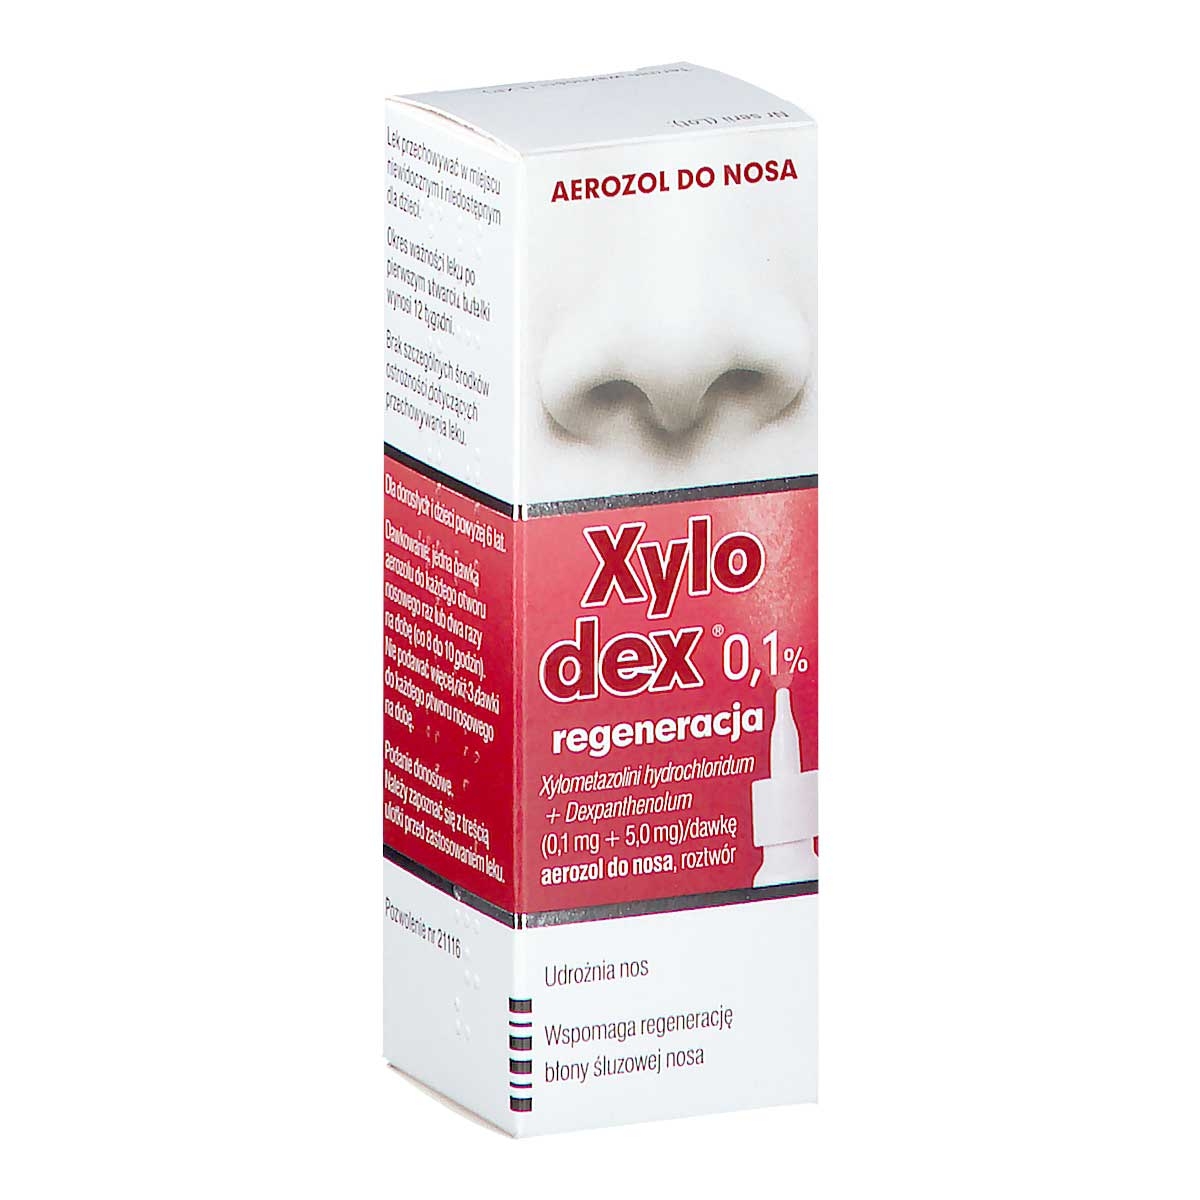 xylodex 0,1% regeneracja aerozol 10 ml